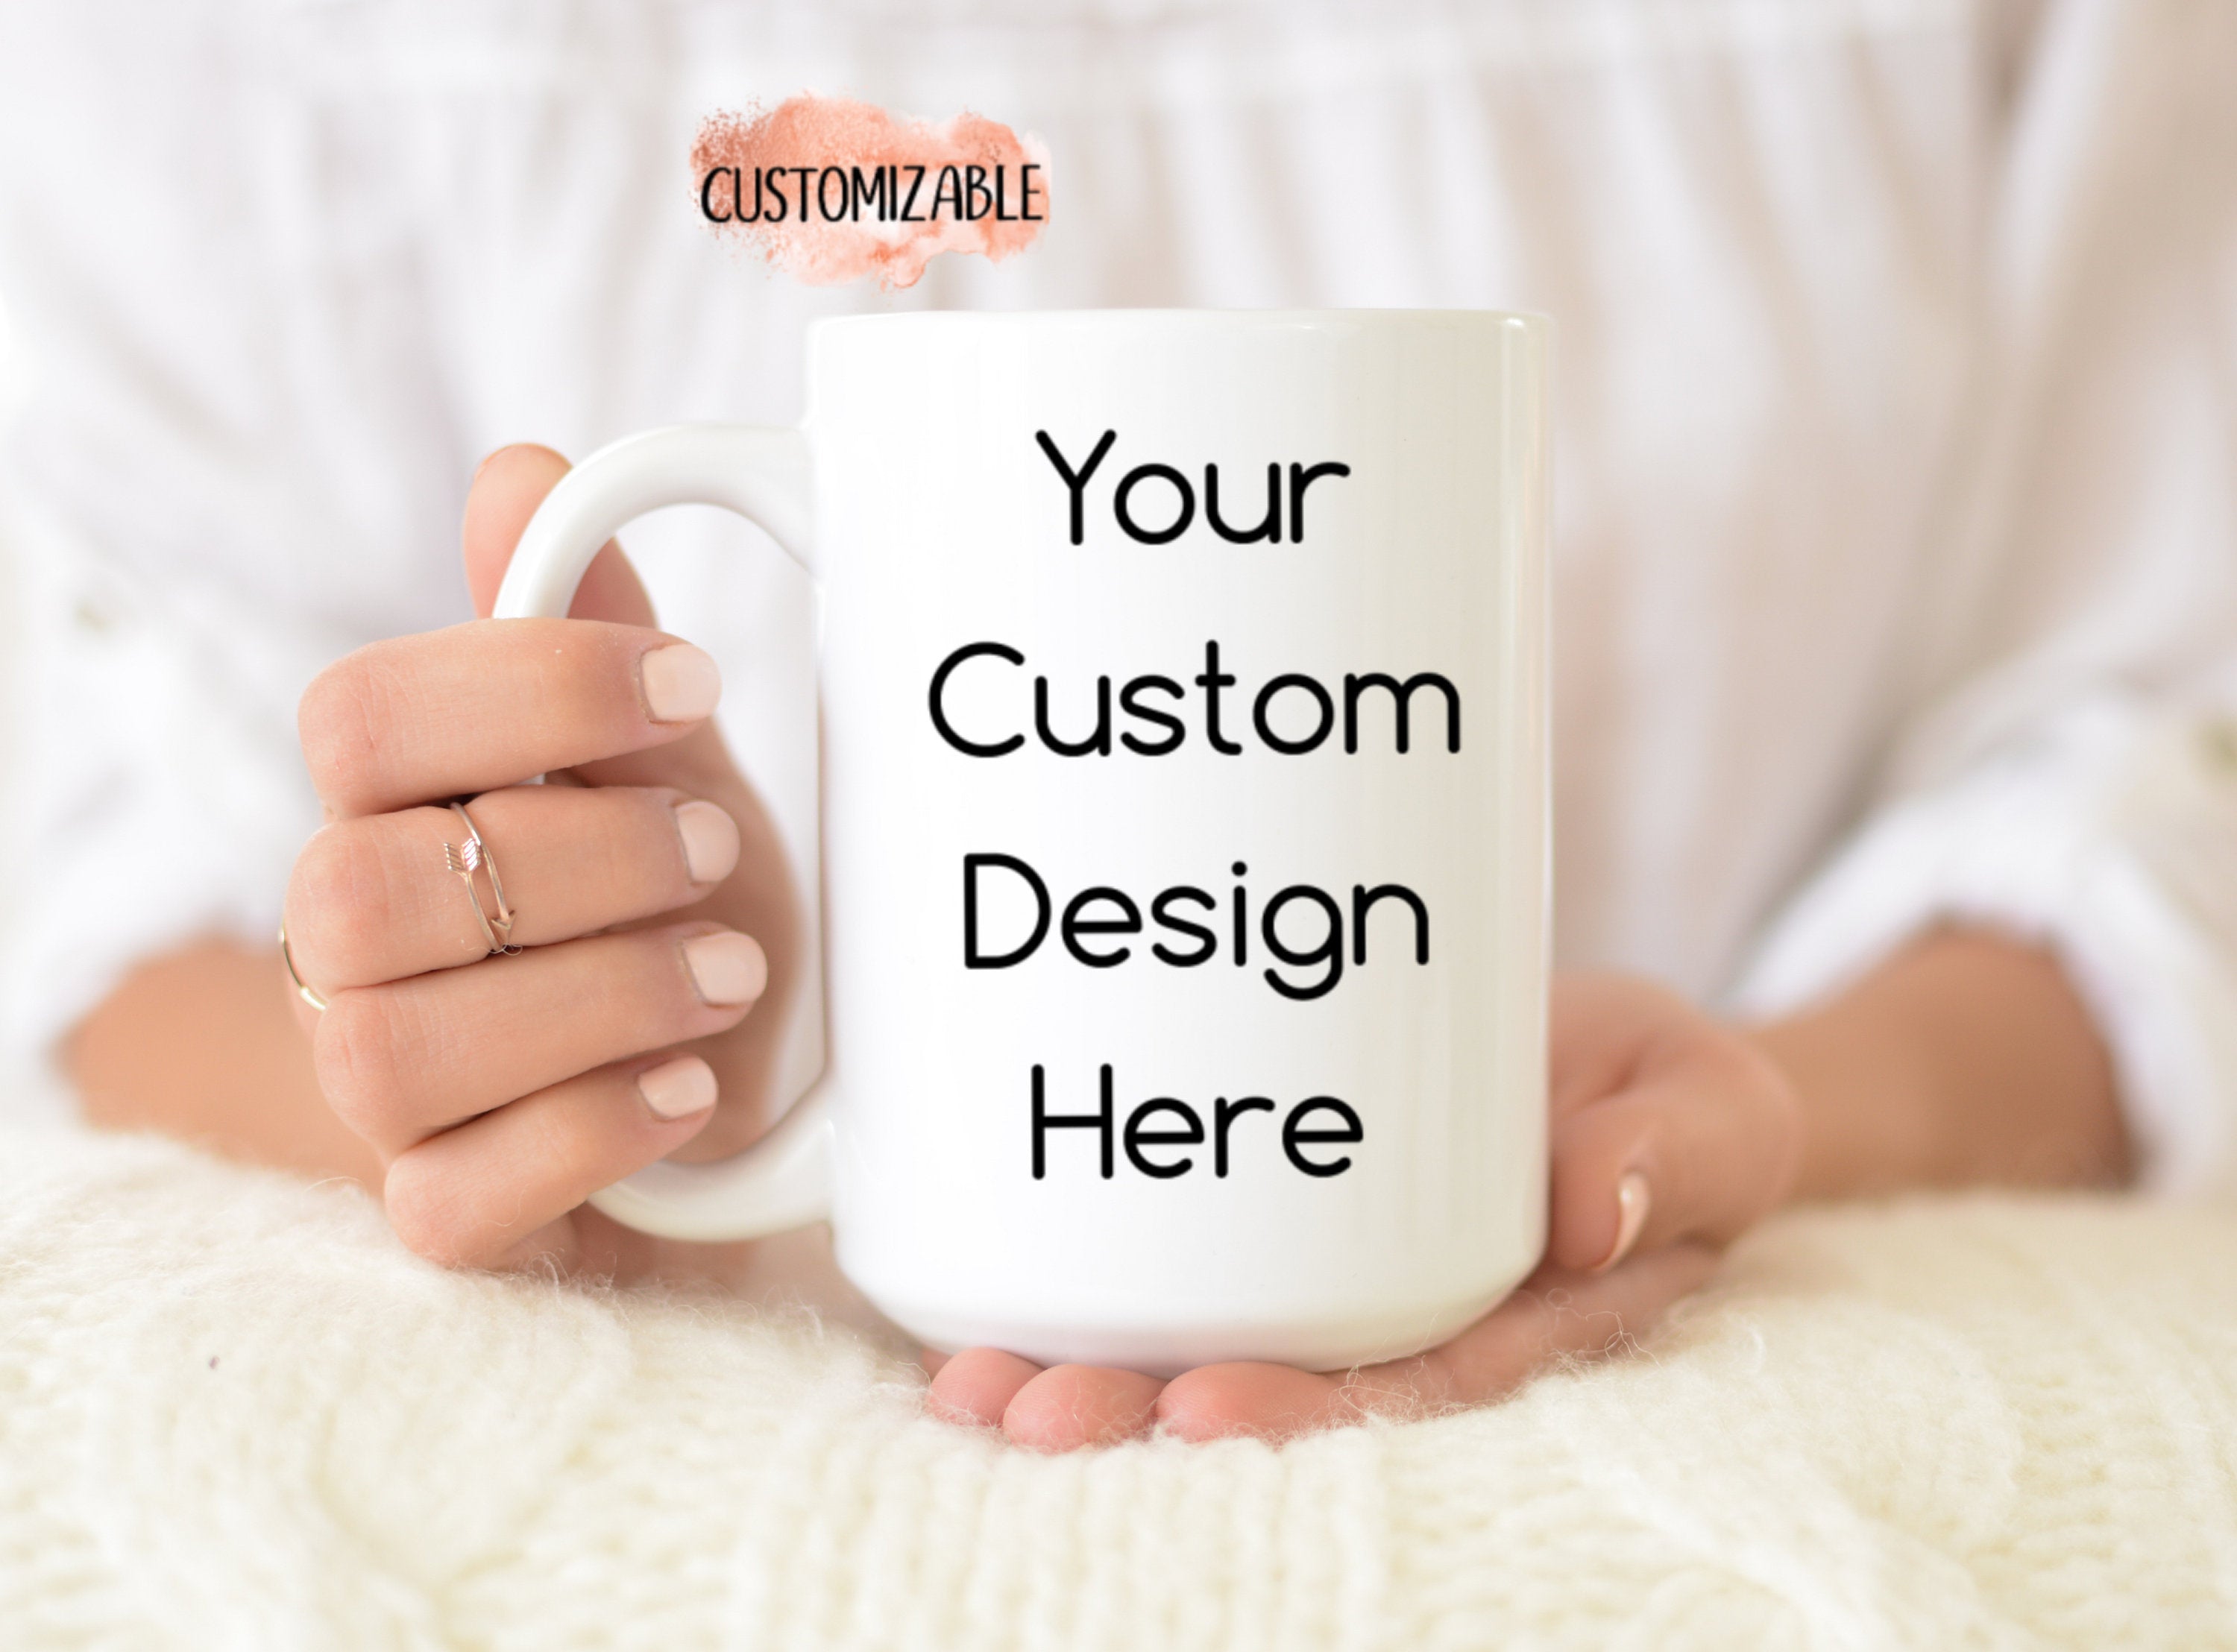 15oz Coffee Mug || Black Handle (choose your design)